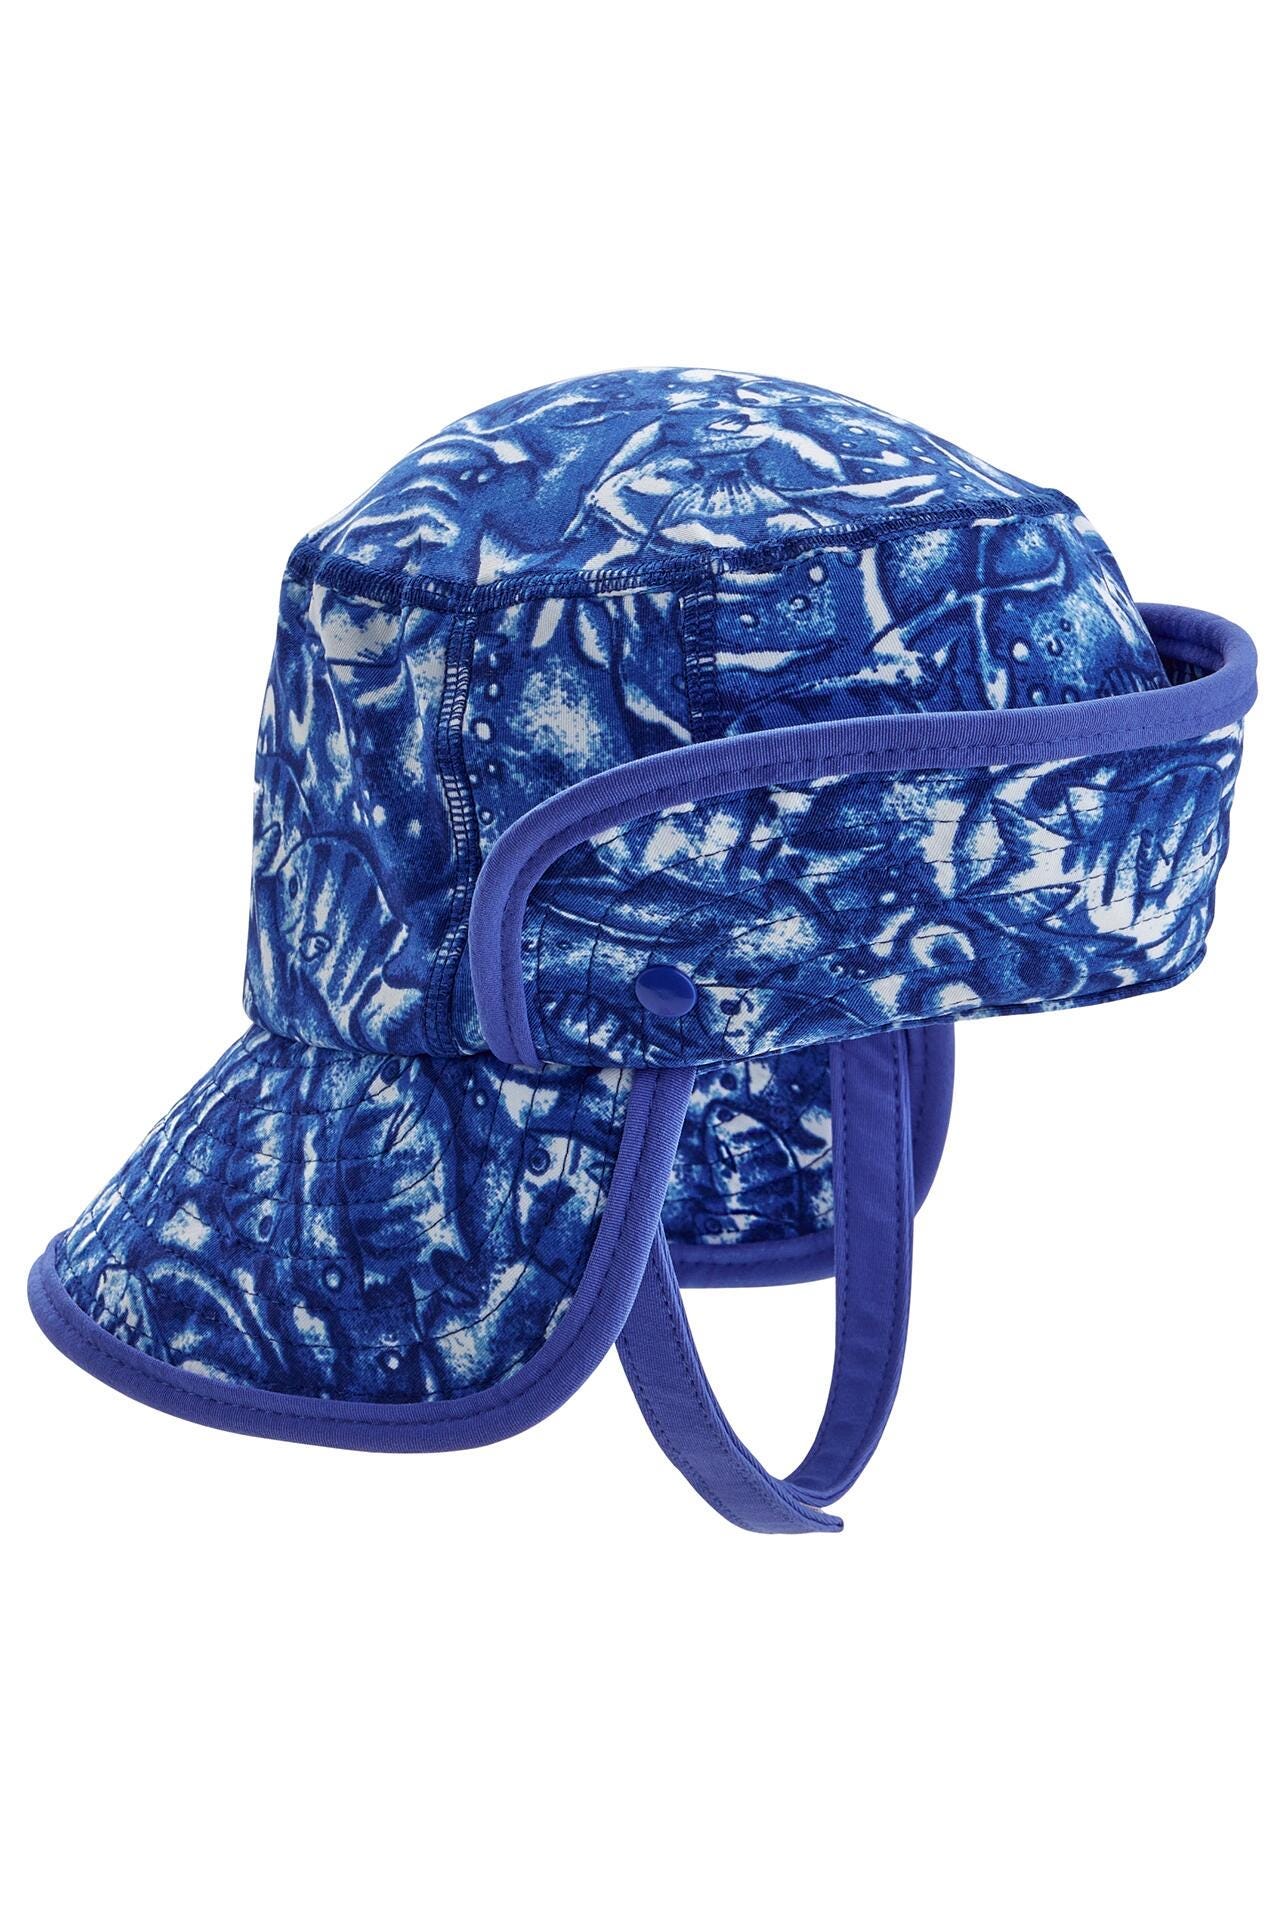 Coolibar UPF 50+ Baby Linden Sun Bucket Hat - Sun Protective